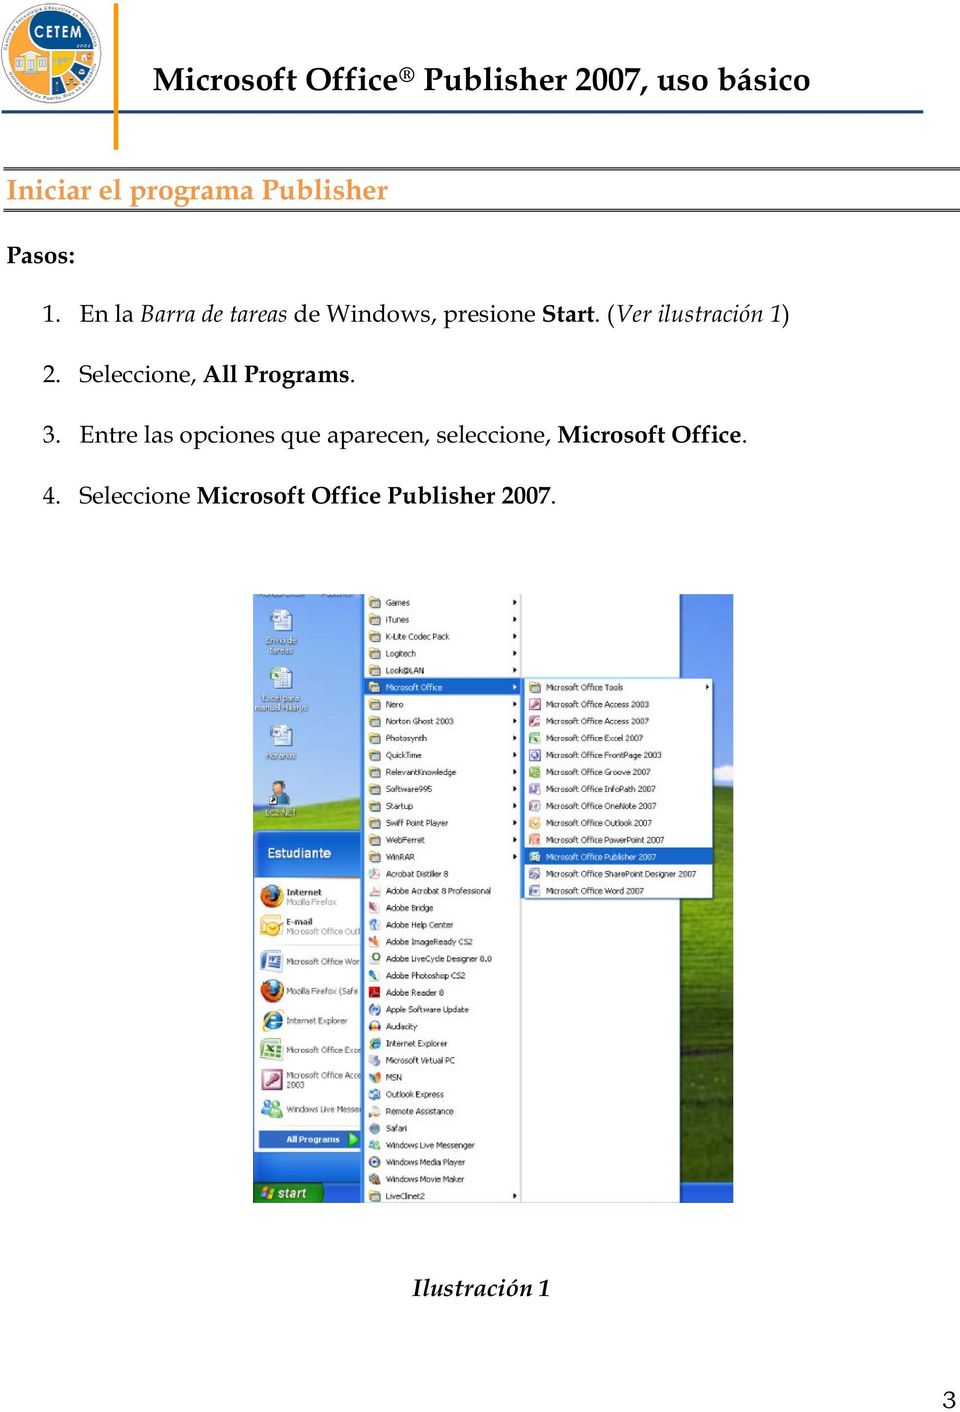 Microsoft Office Publisher 2007, uso básico - PDF Descargar libre